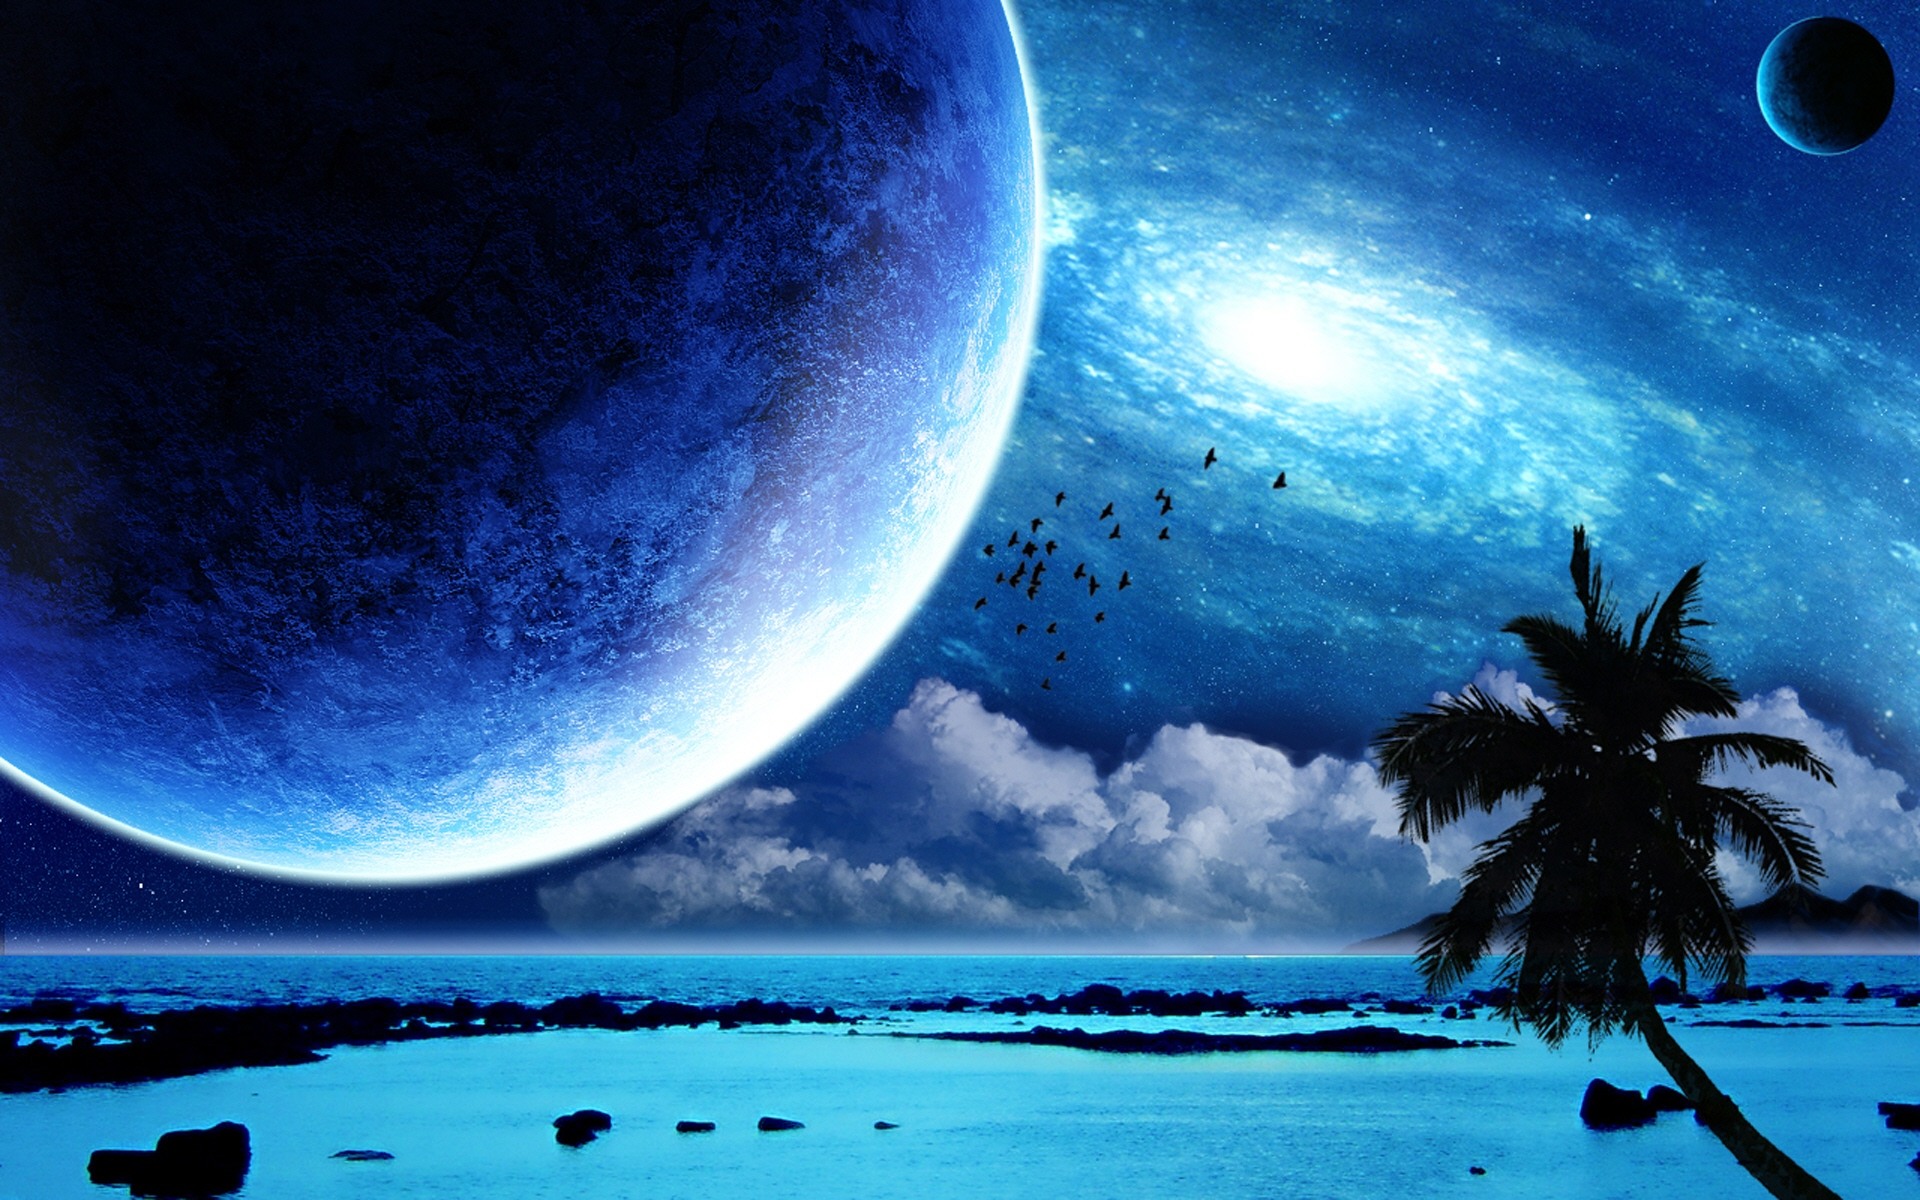 Interstellar Tropical Paradise desktop wallpaper